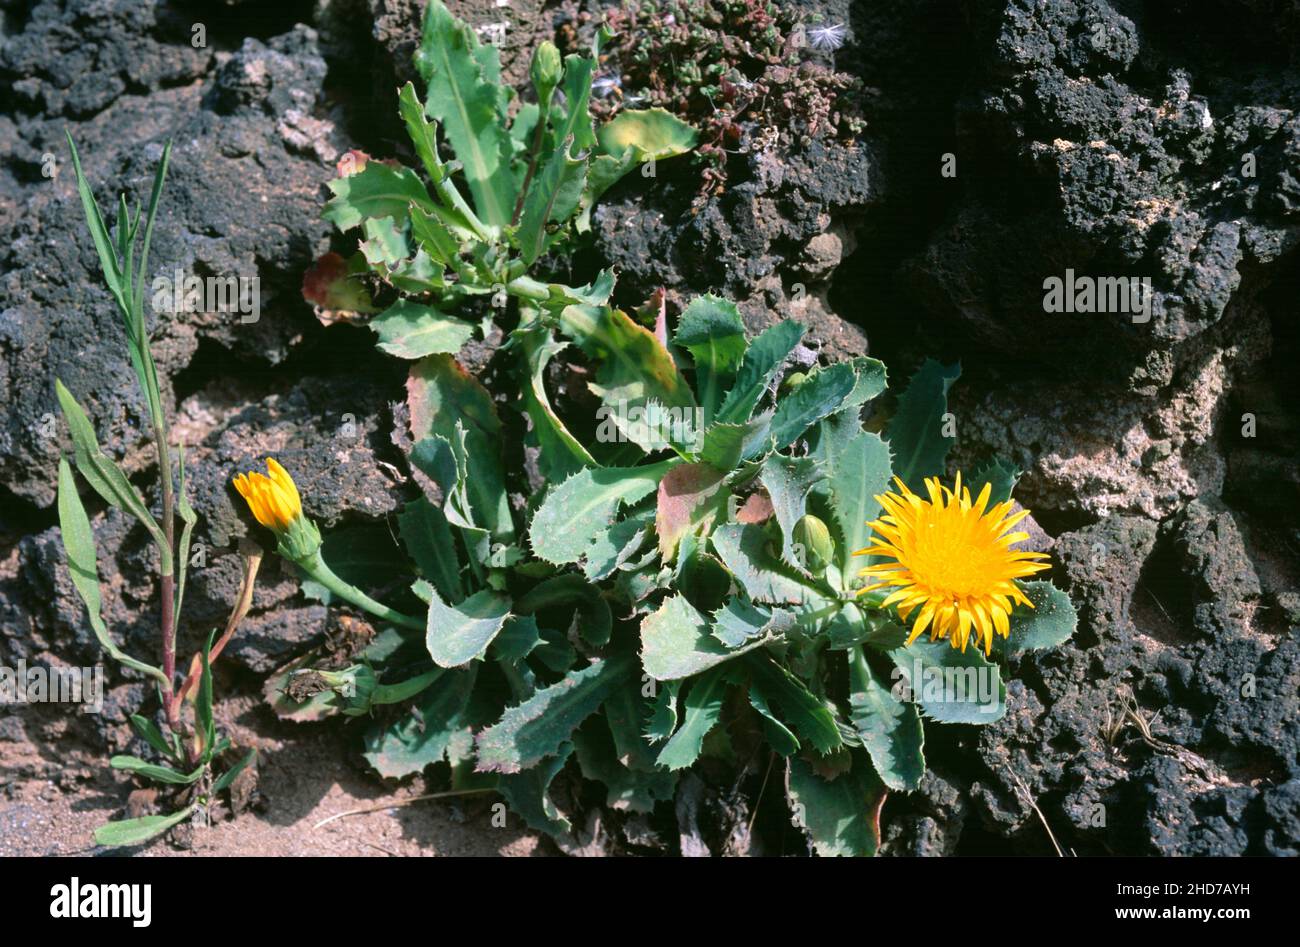 Cerraja de costa (Reichardia ligulata) is a perennial herb endemic to Canary Islands. Stock Photo